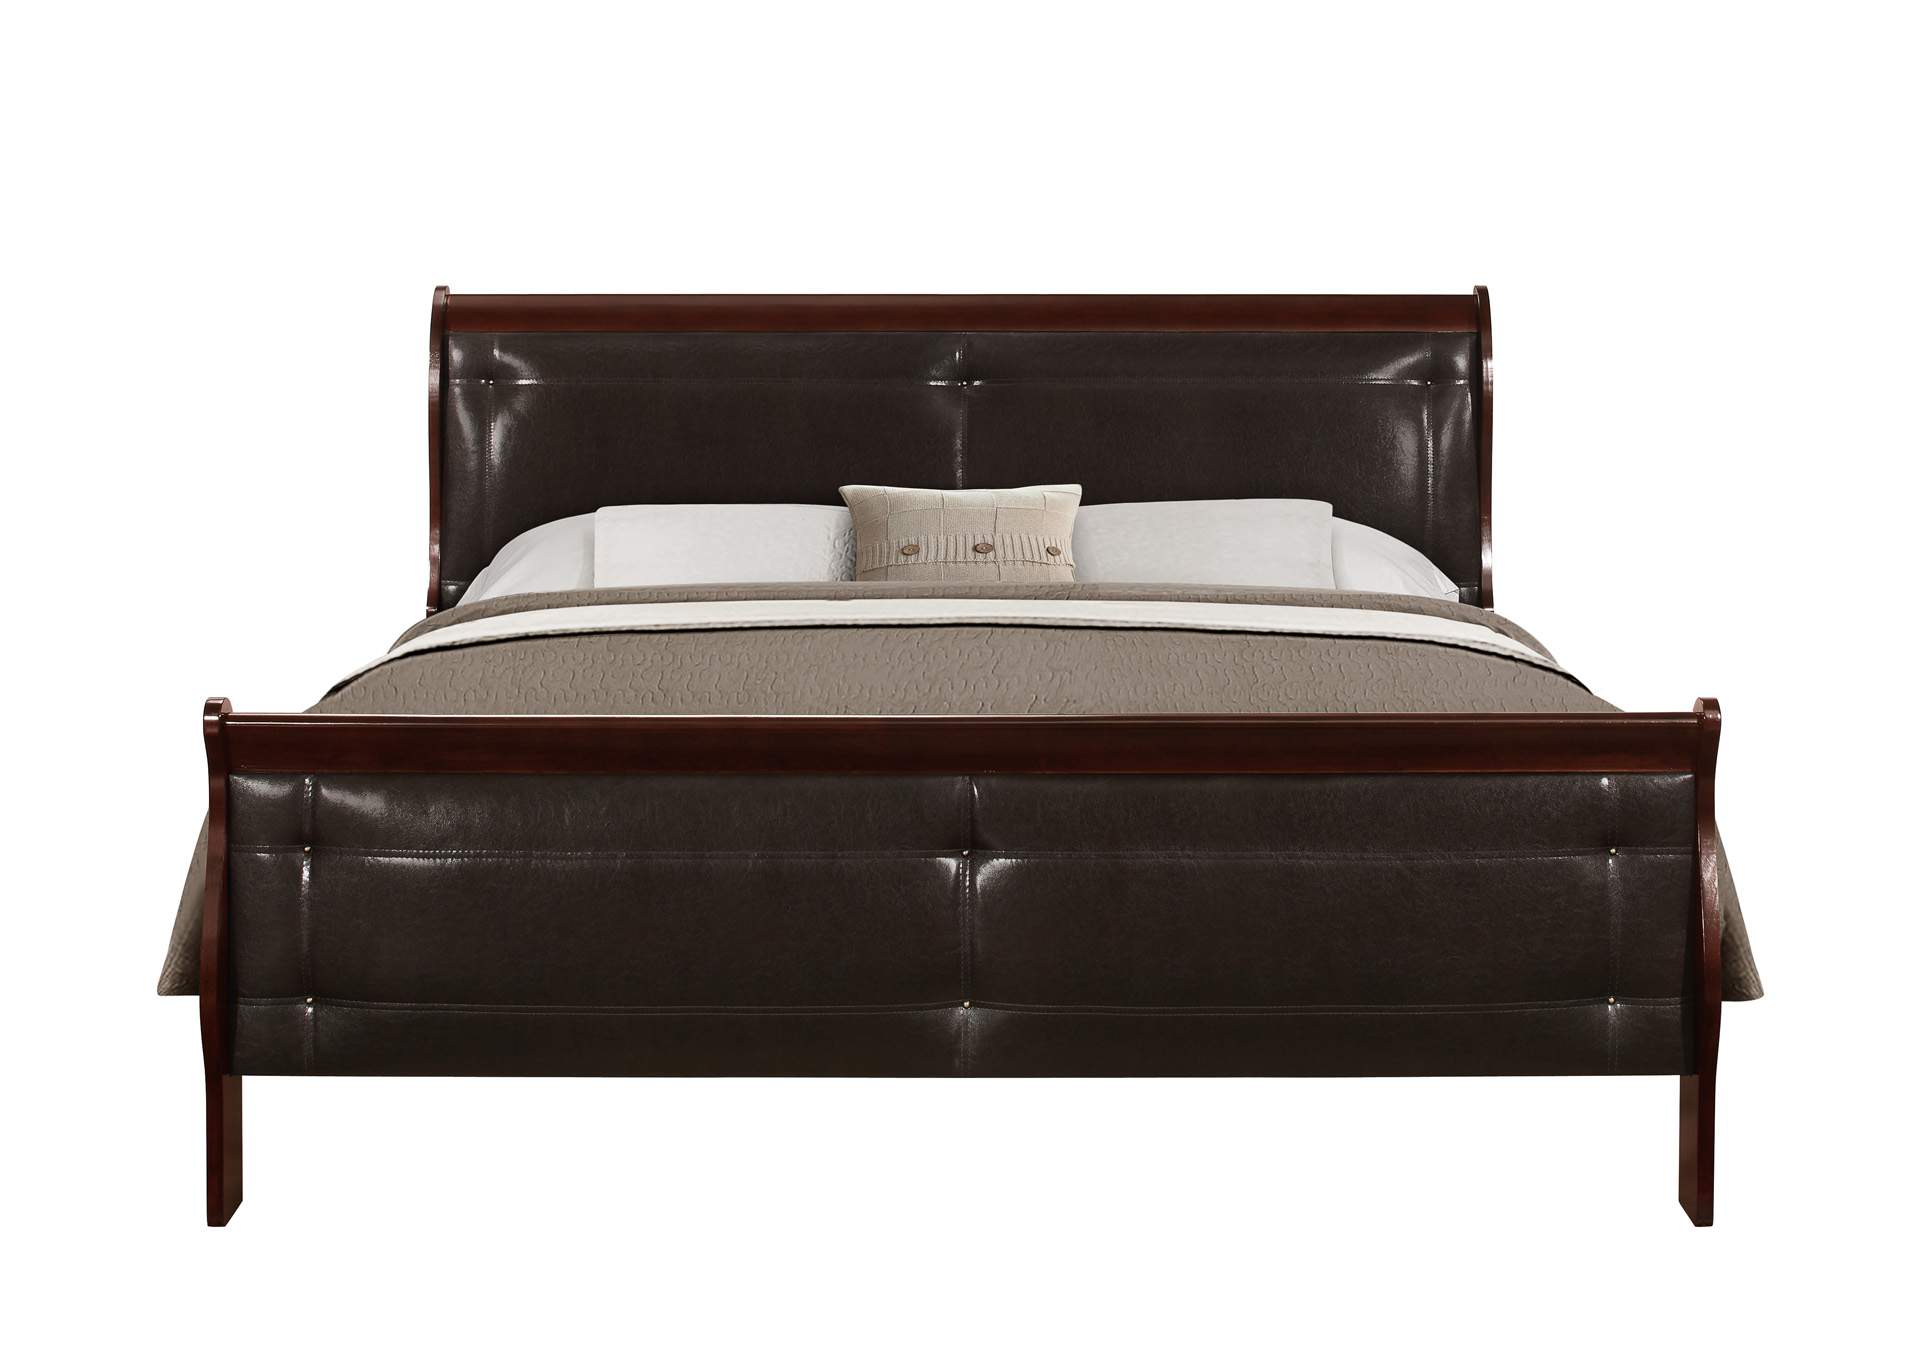 Merlot Marley King Bed,Global Furniture USA